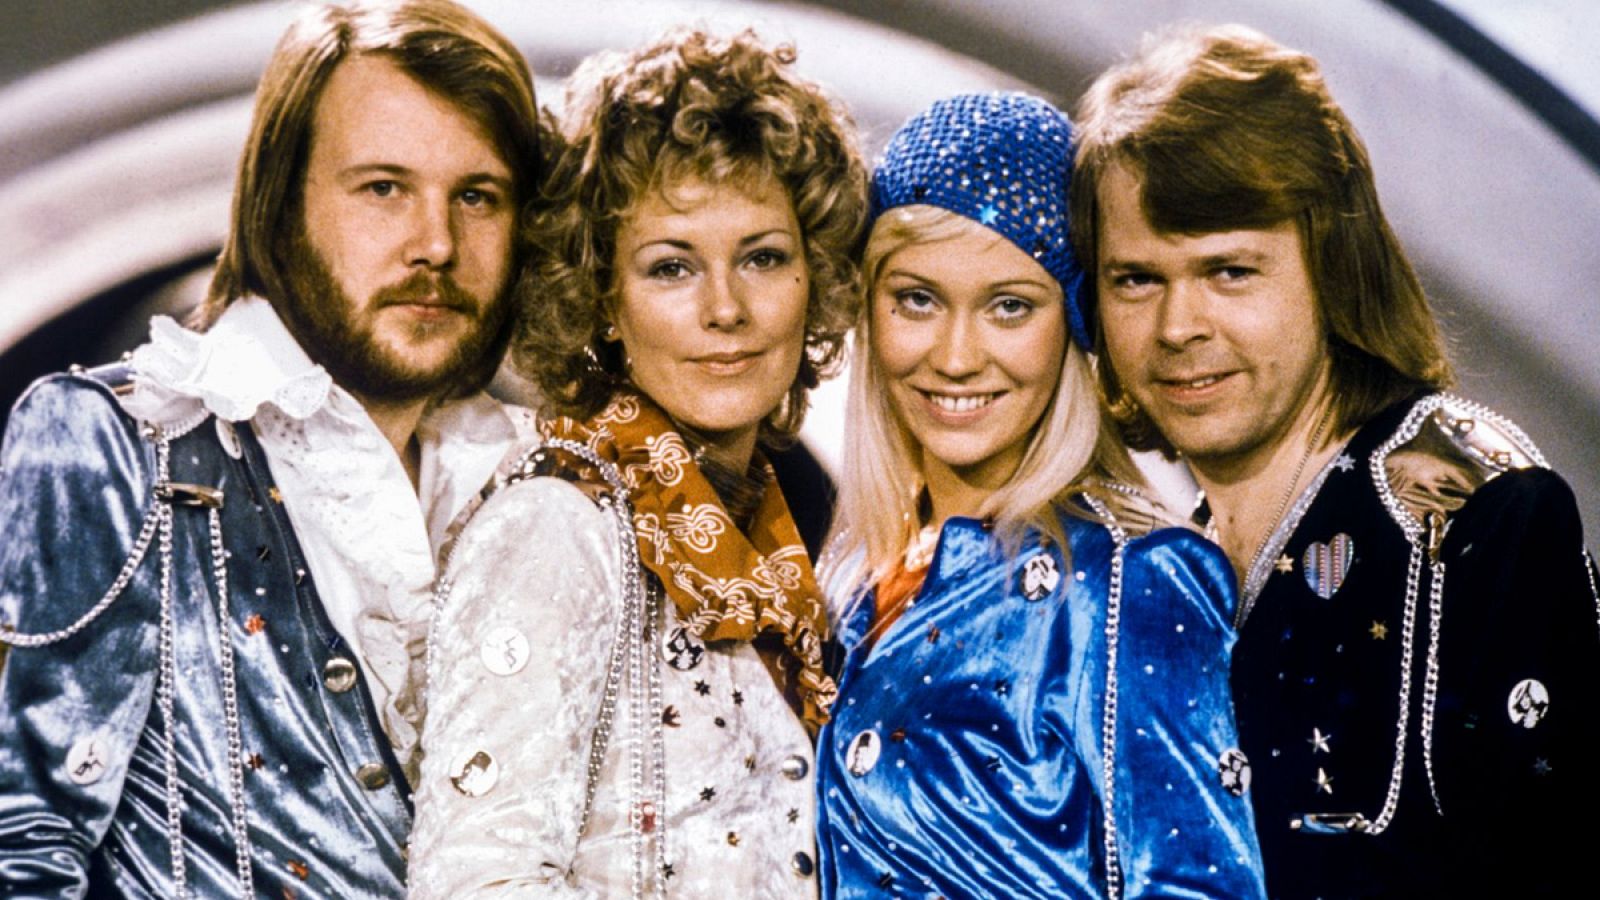 Benny Andersson, Anni-Frid Lyngstad, Agnetha Fältskog y Björn Ulvaeus,  integrantes de ABBA.